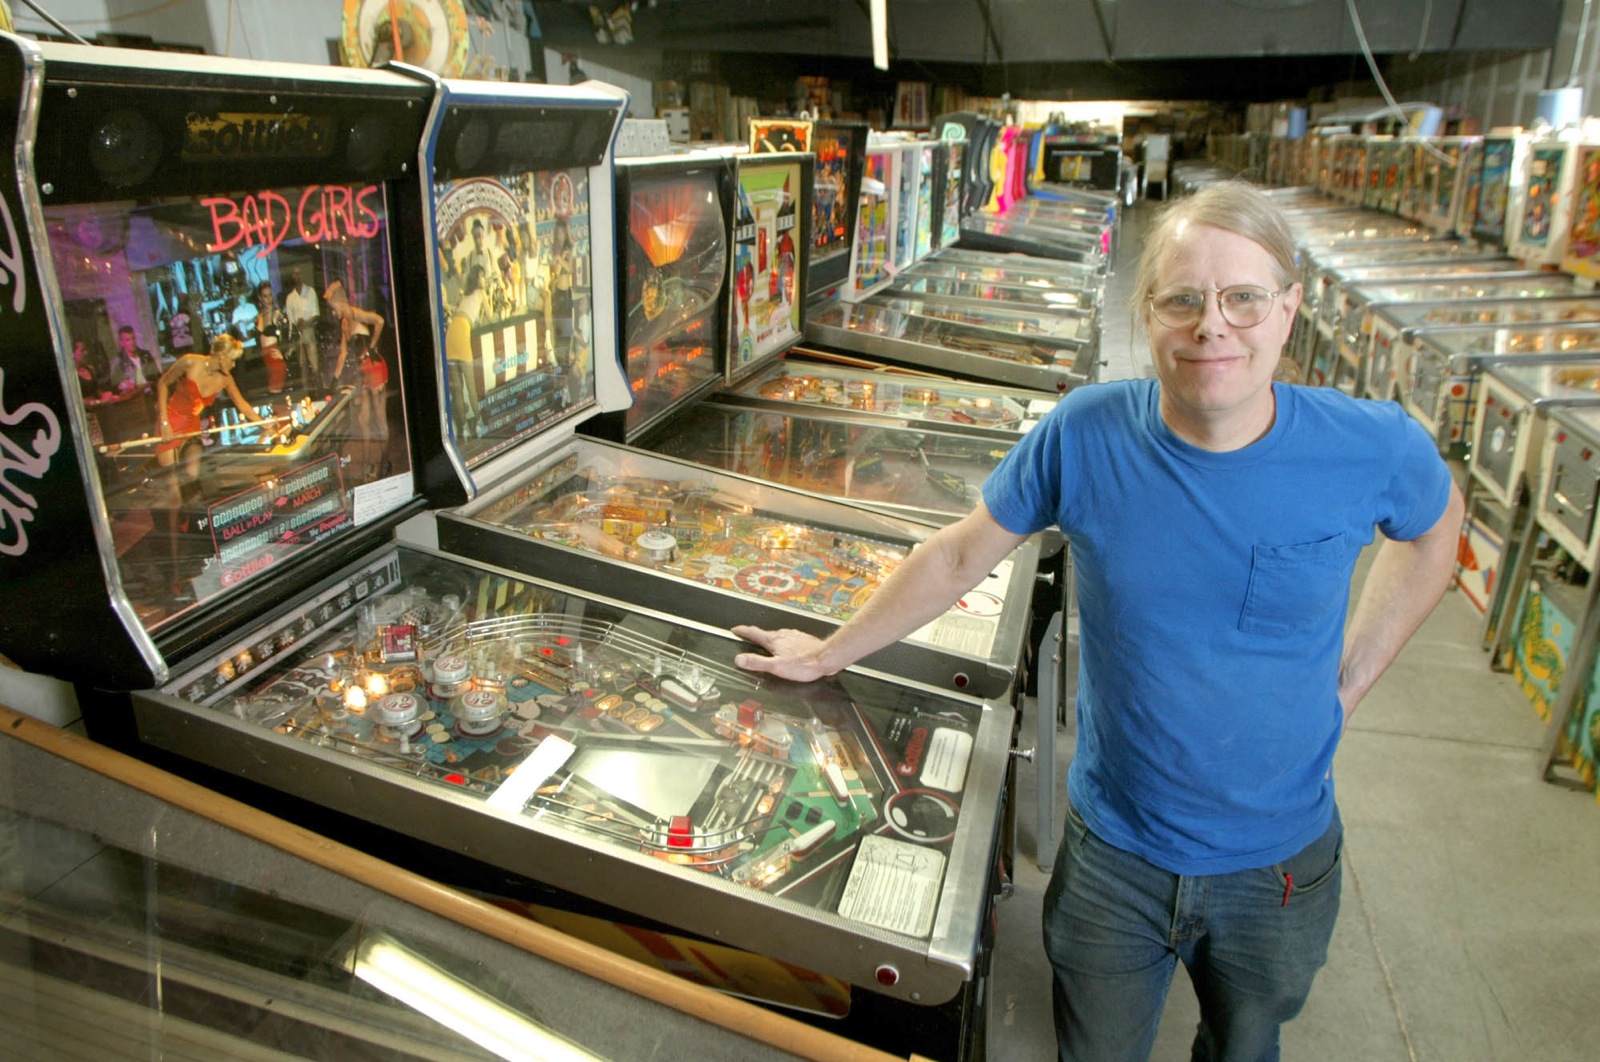 Pinball Hall of Fame - Mark's Las Vegas